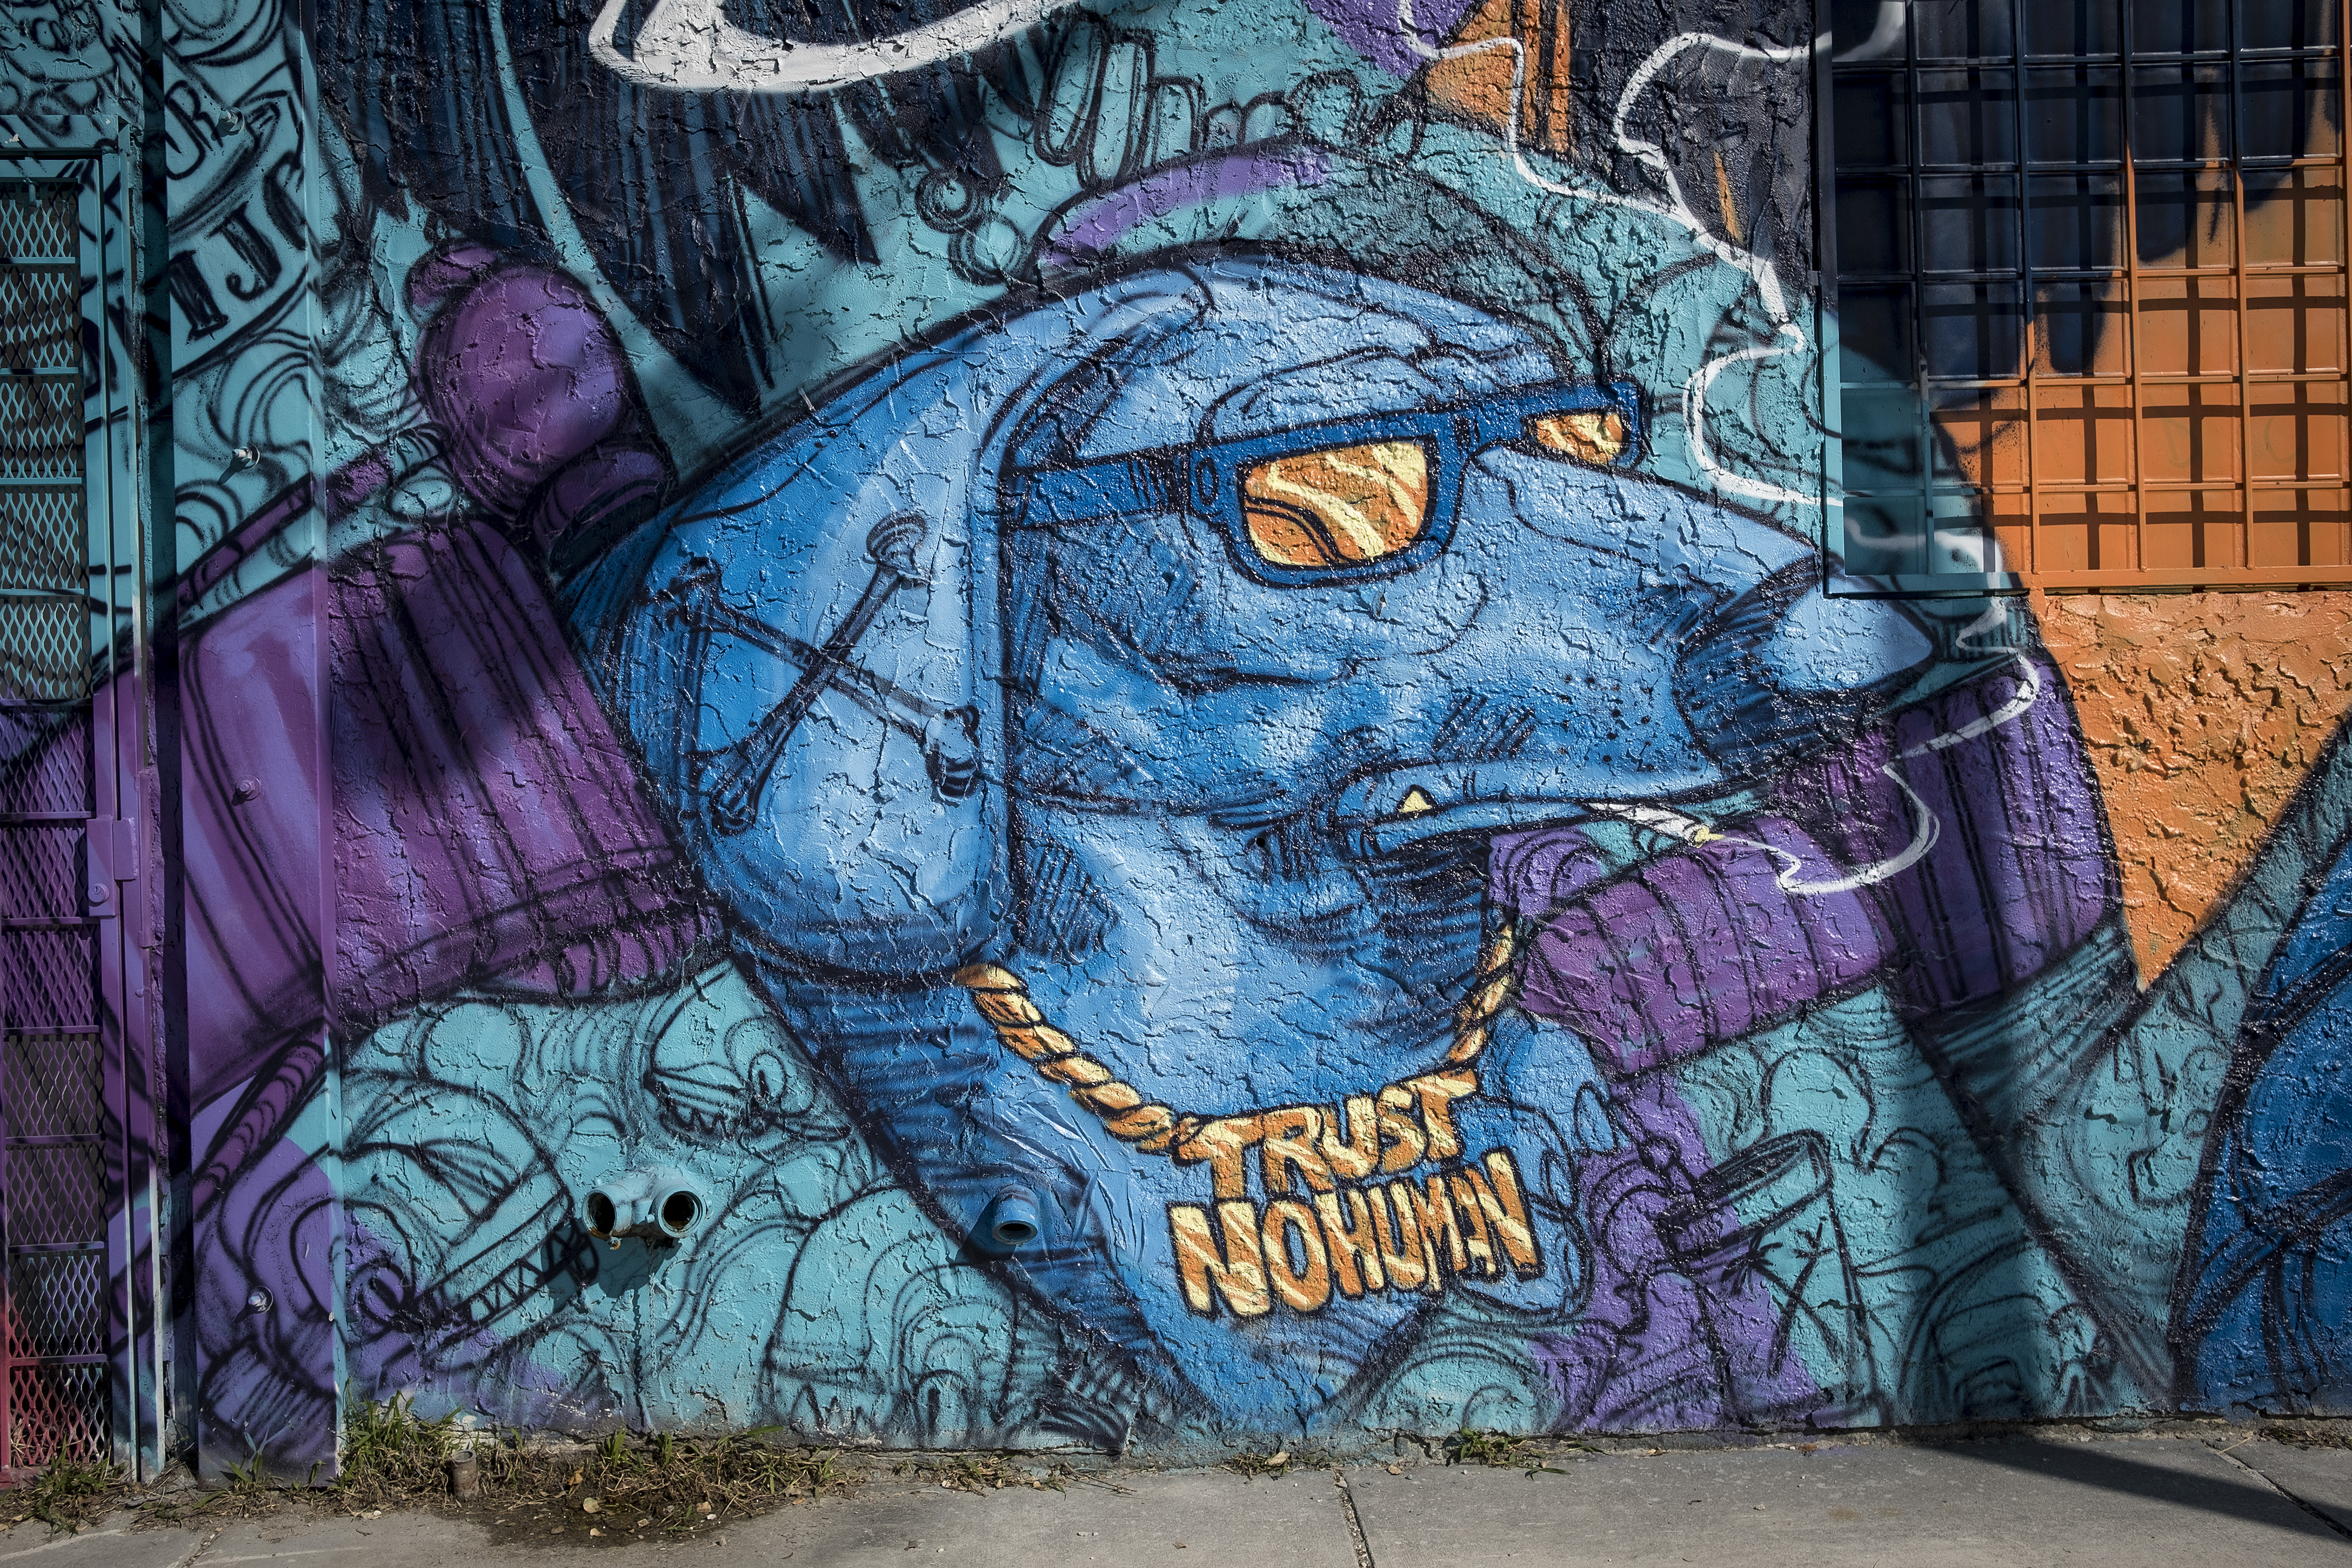 Street art in Wynwood neighborhood in Miami, FL